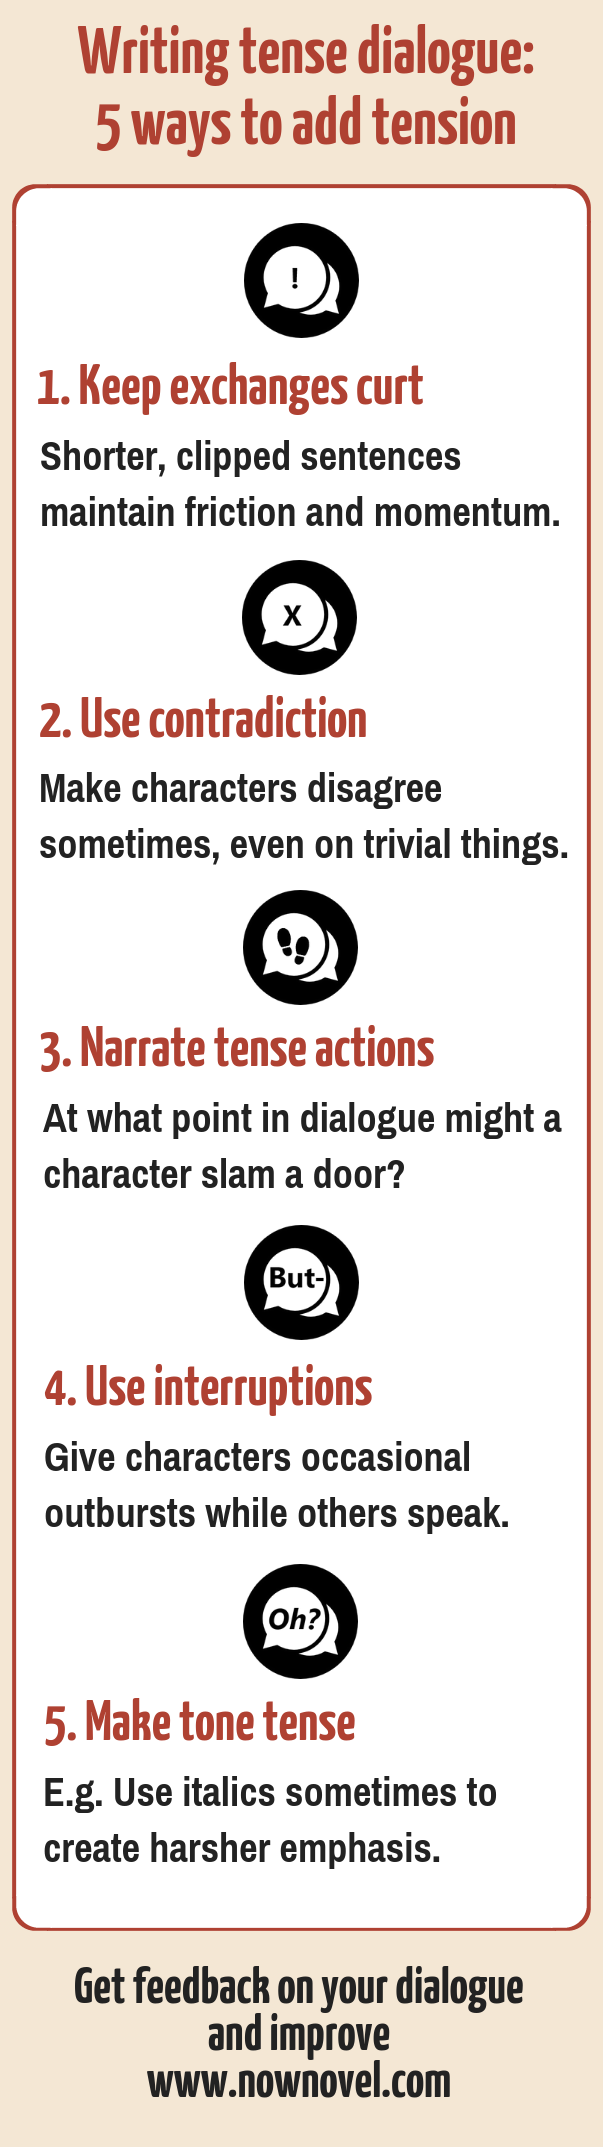 Writing tense dialogue - infographic | Now Novel